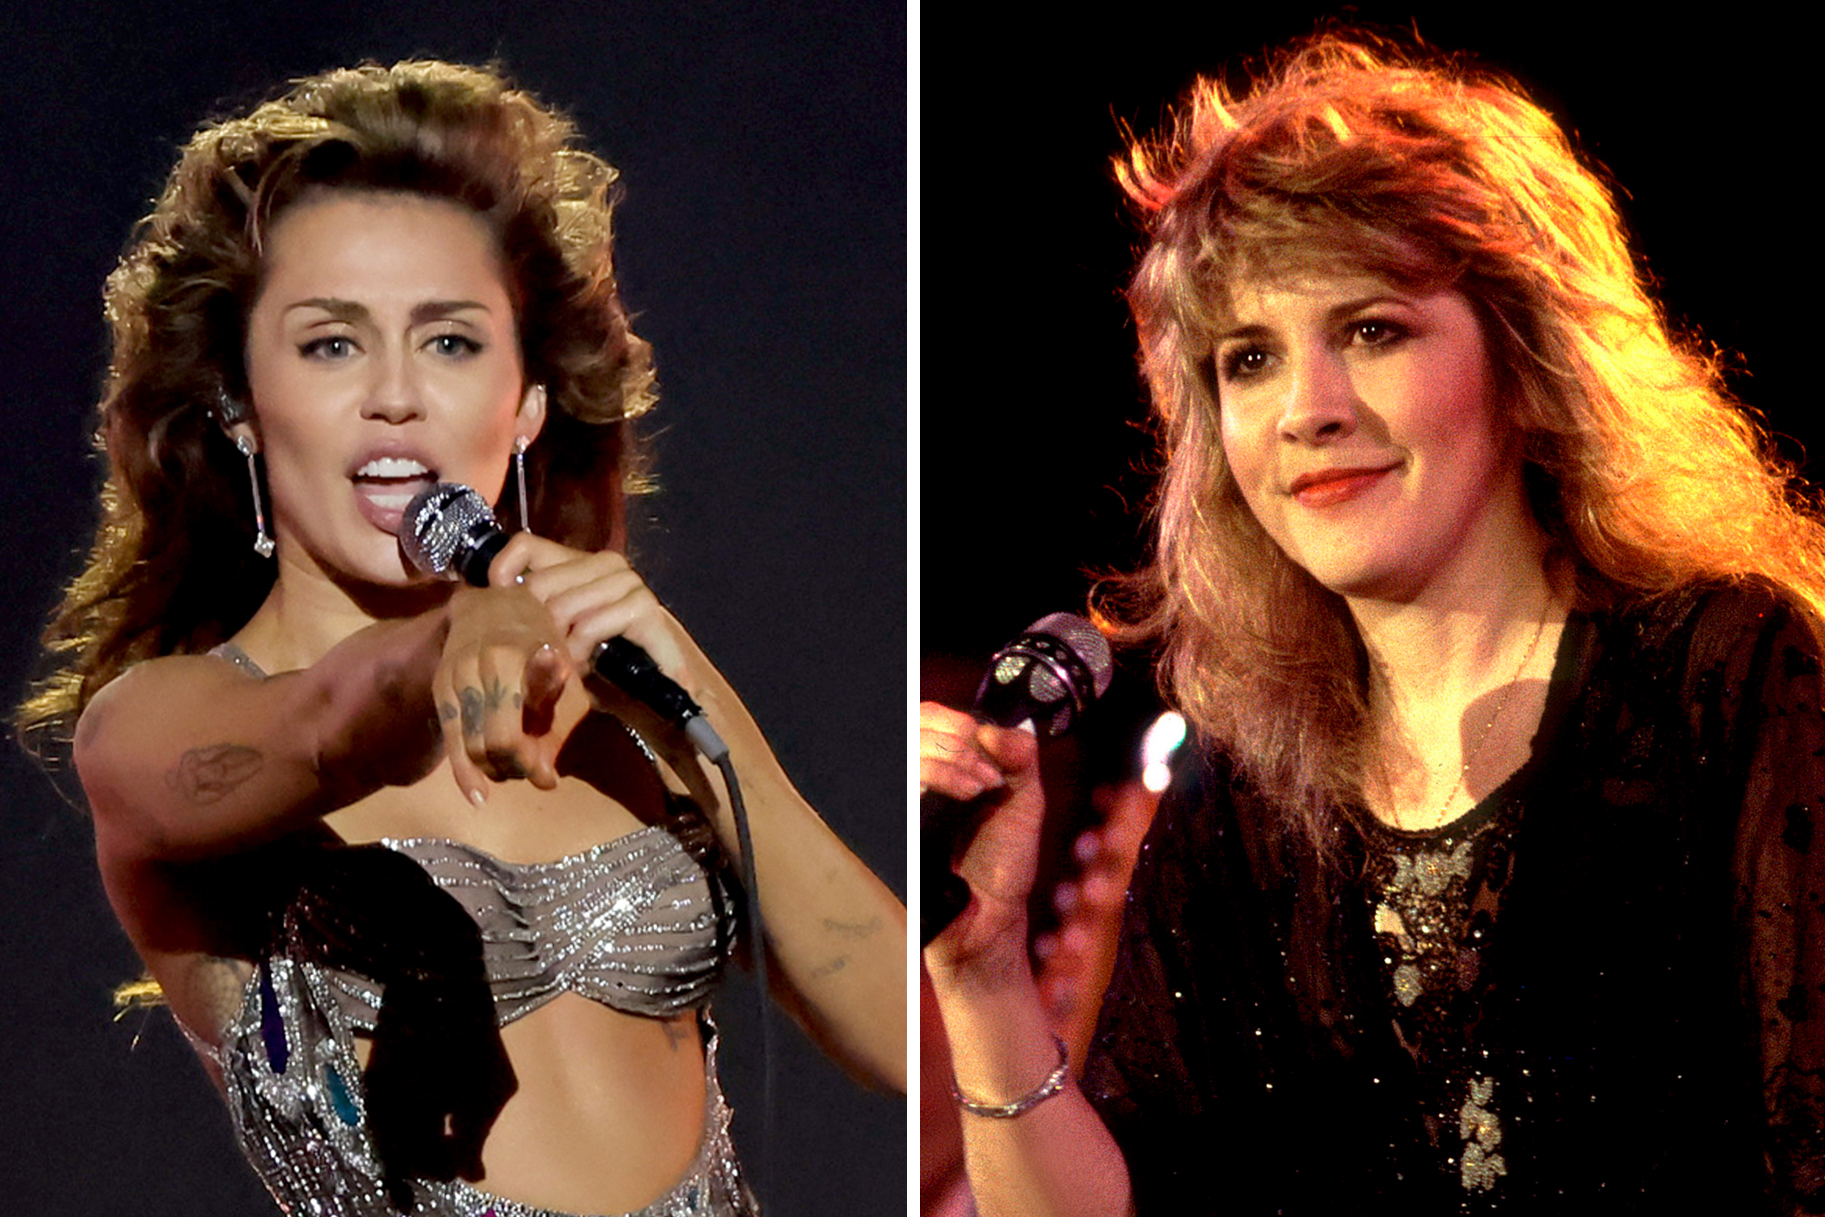 Miley Cyrus Covers Fleetwood Mac's Landslide (VIDEO) | NBC Insider